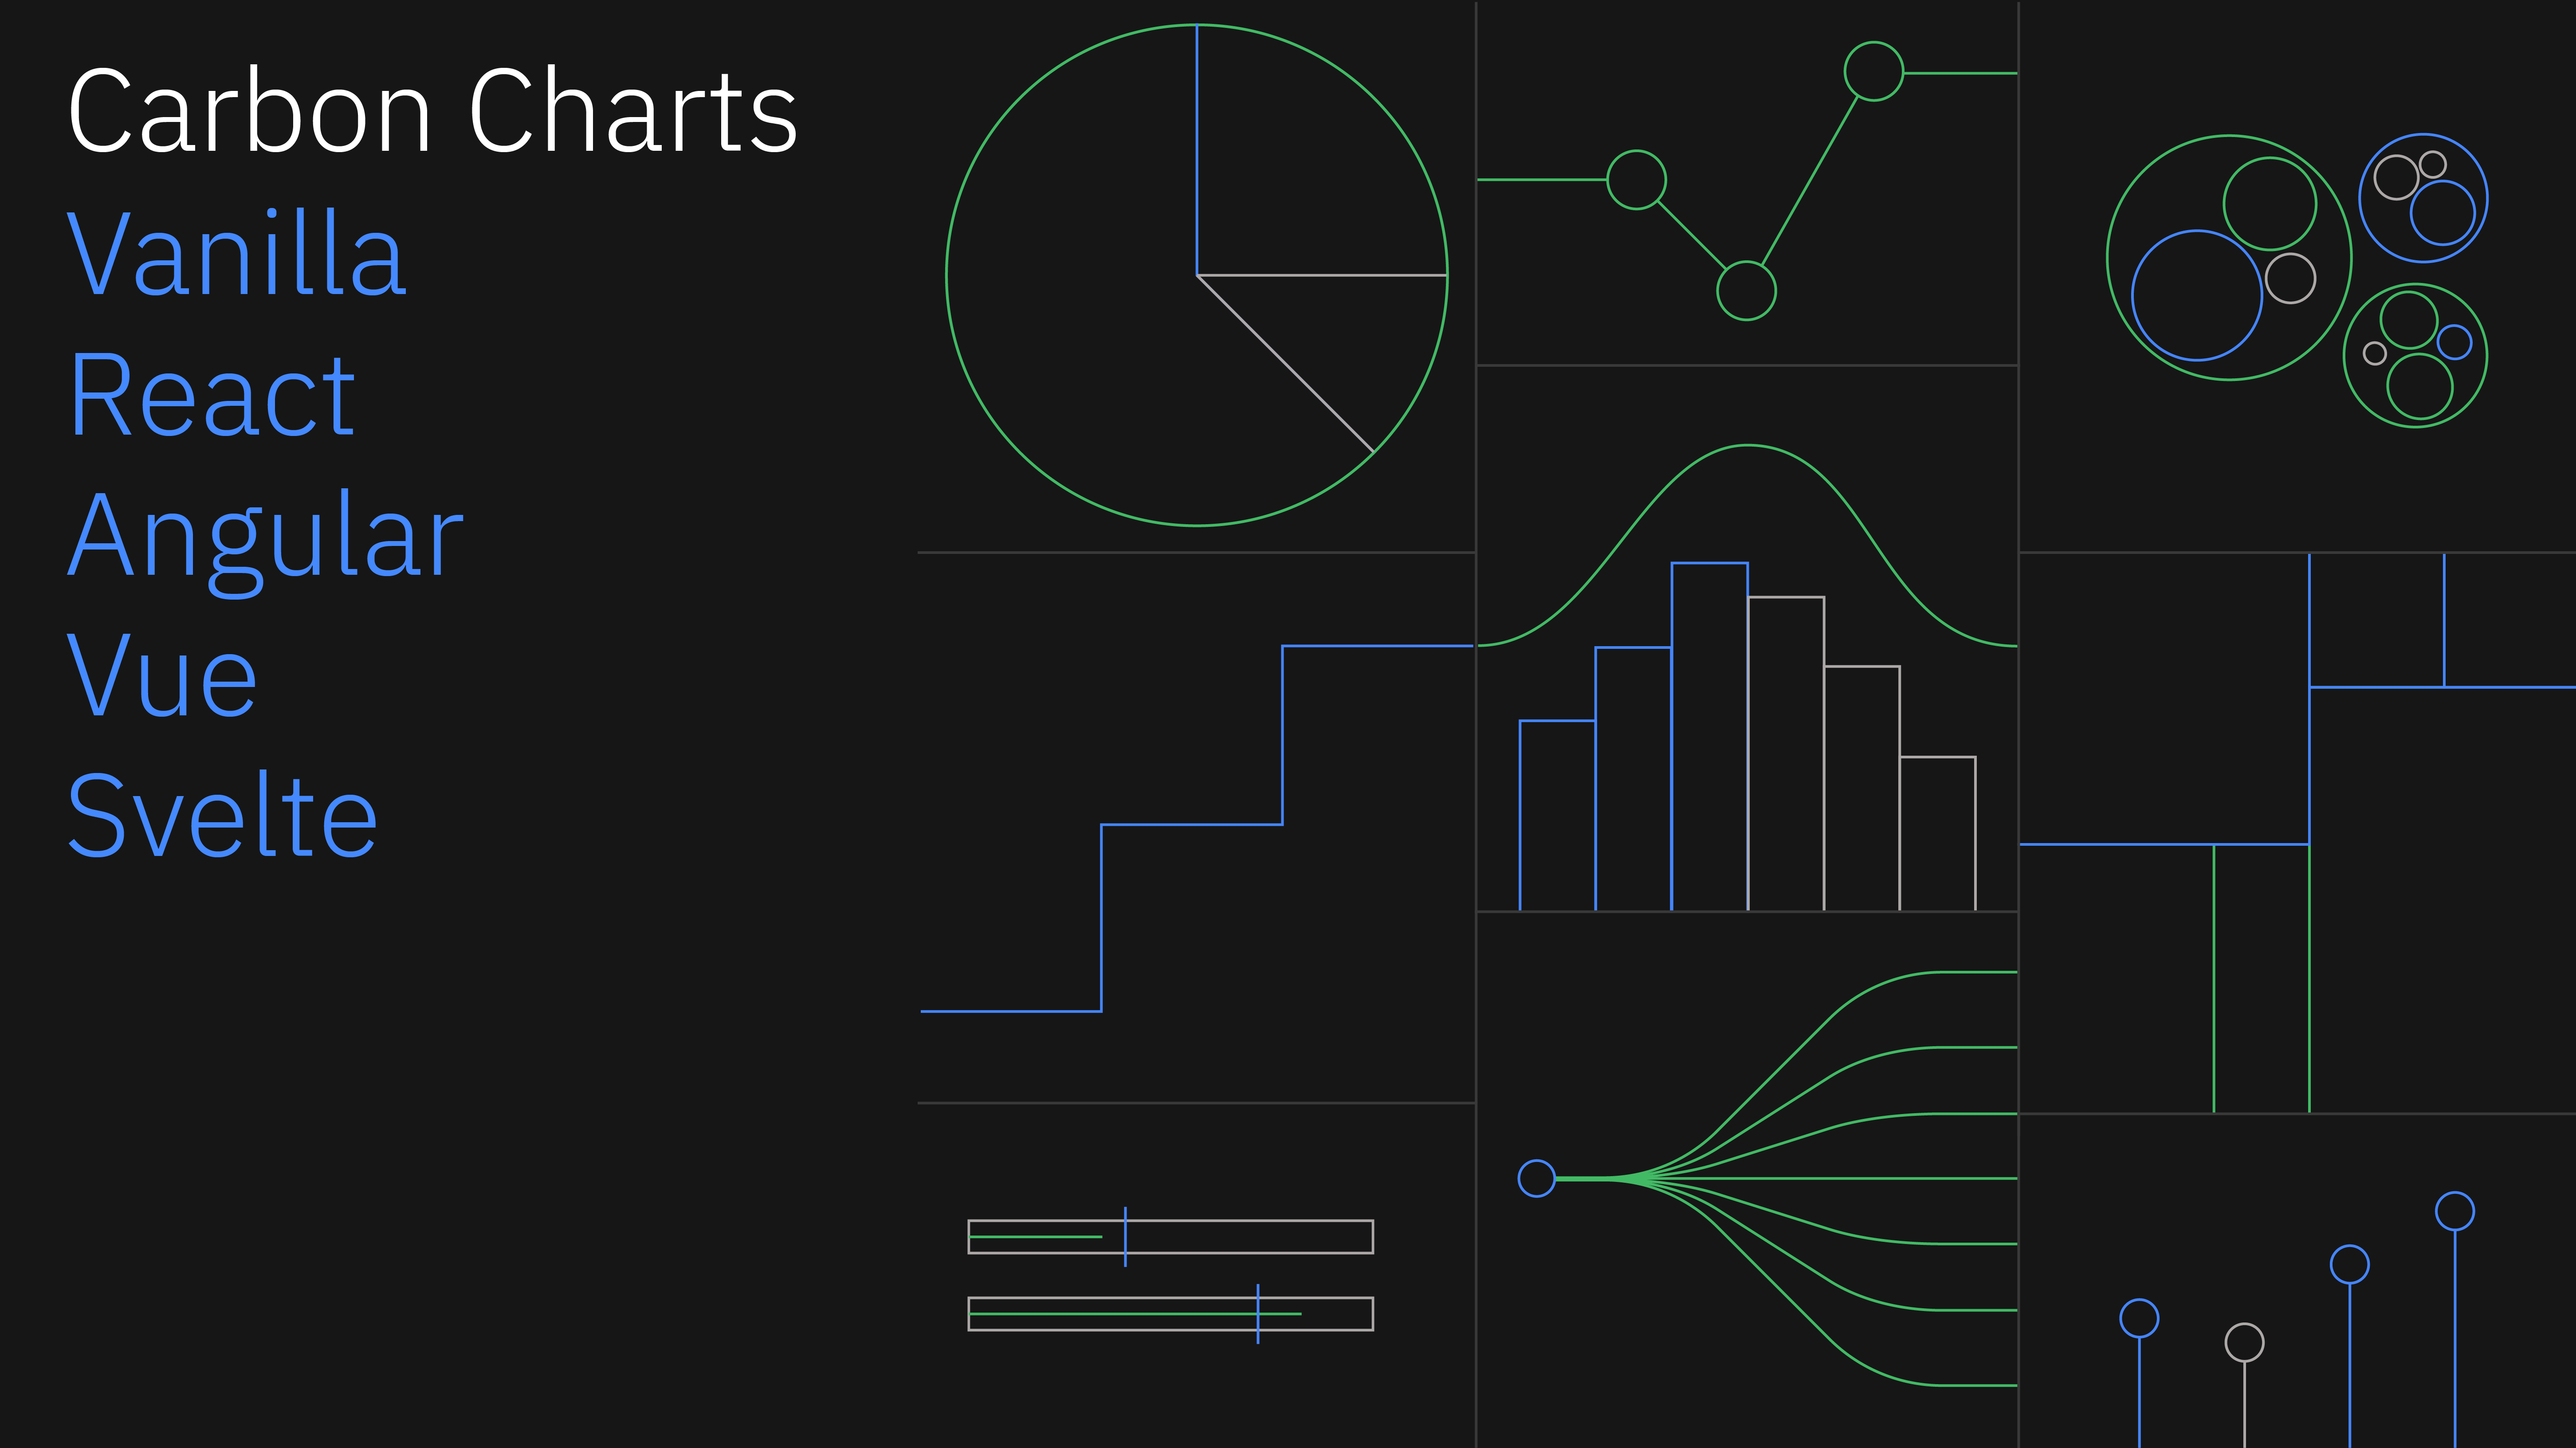 Carbon Charts